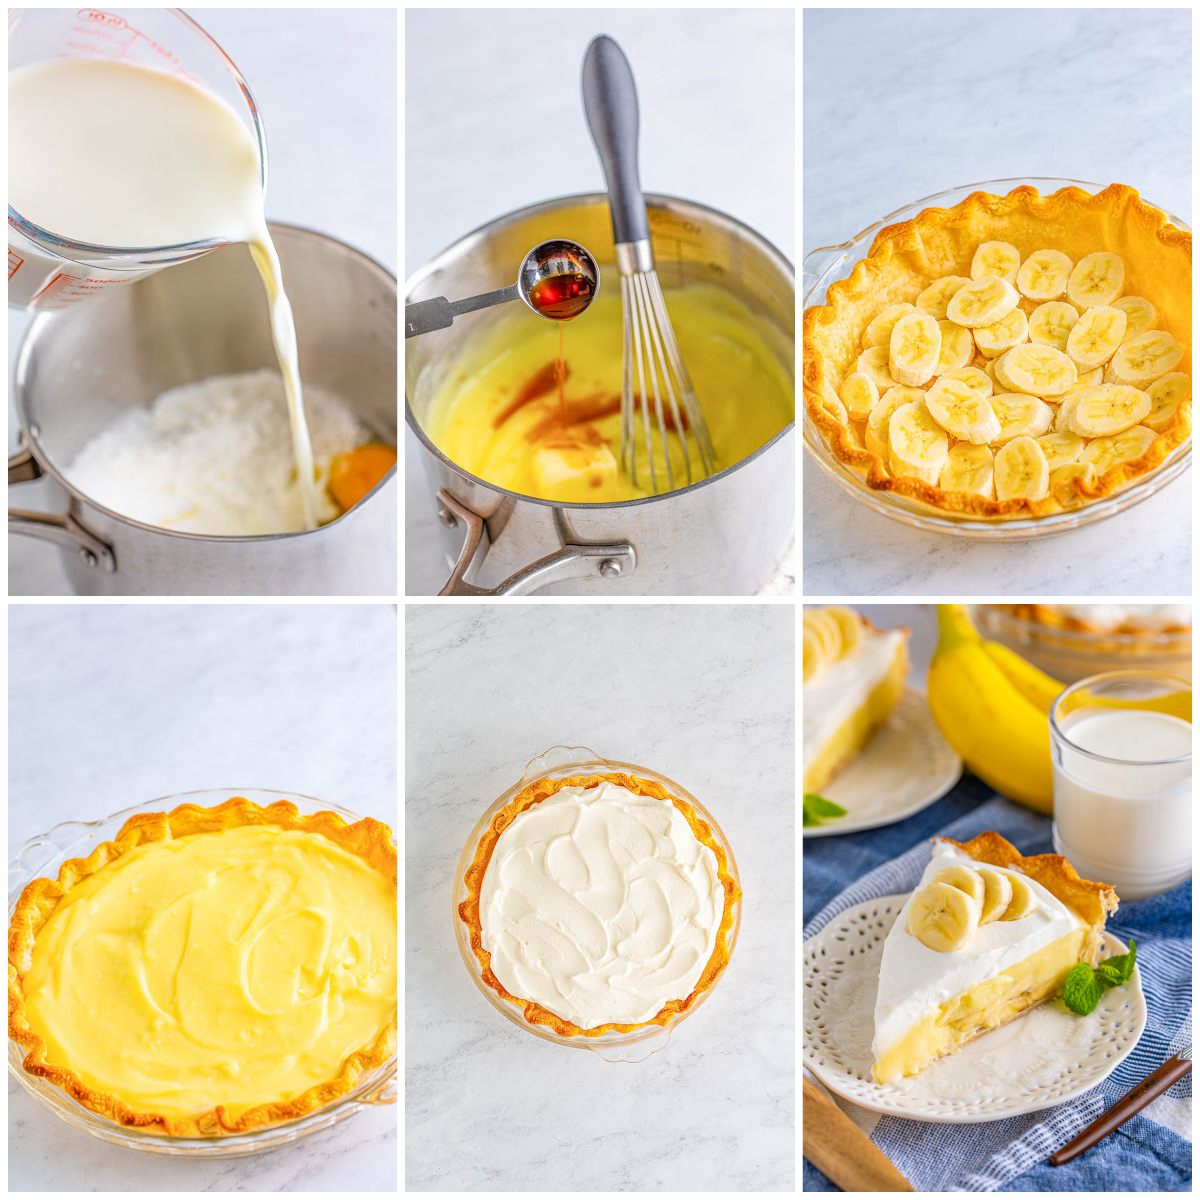 Step by step photos on how to make a Banana Cream Pie.